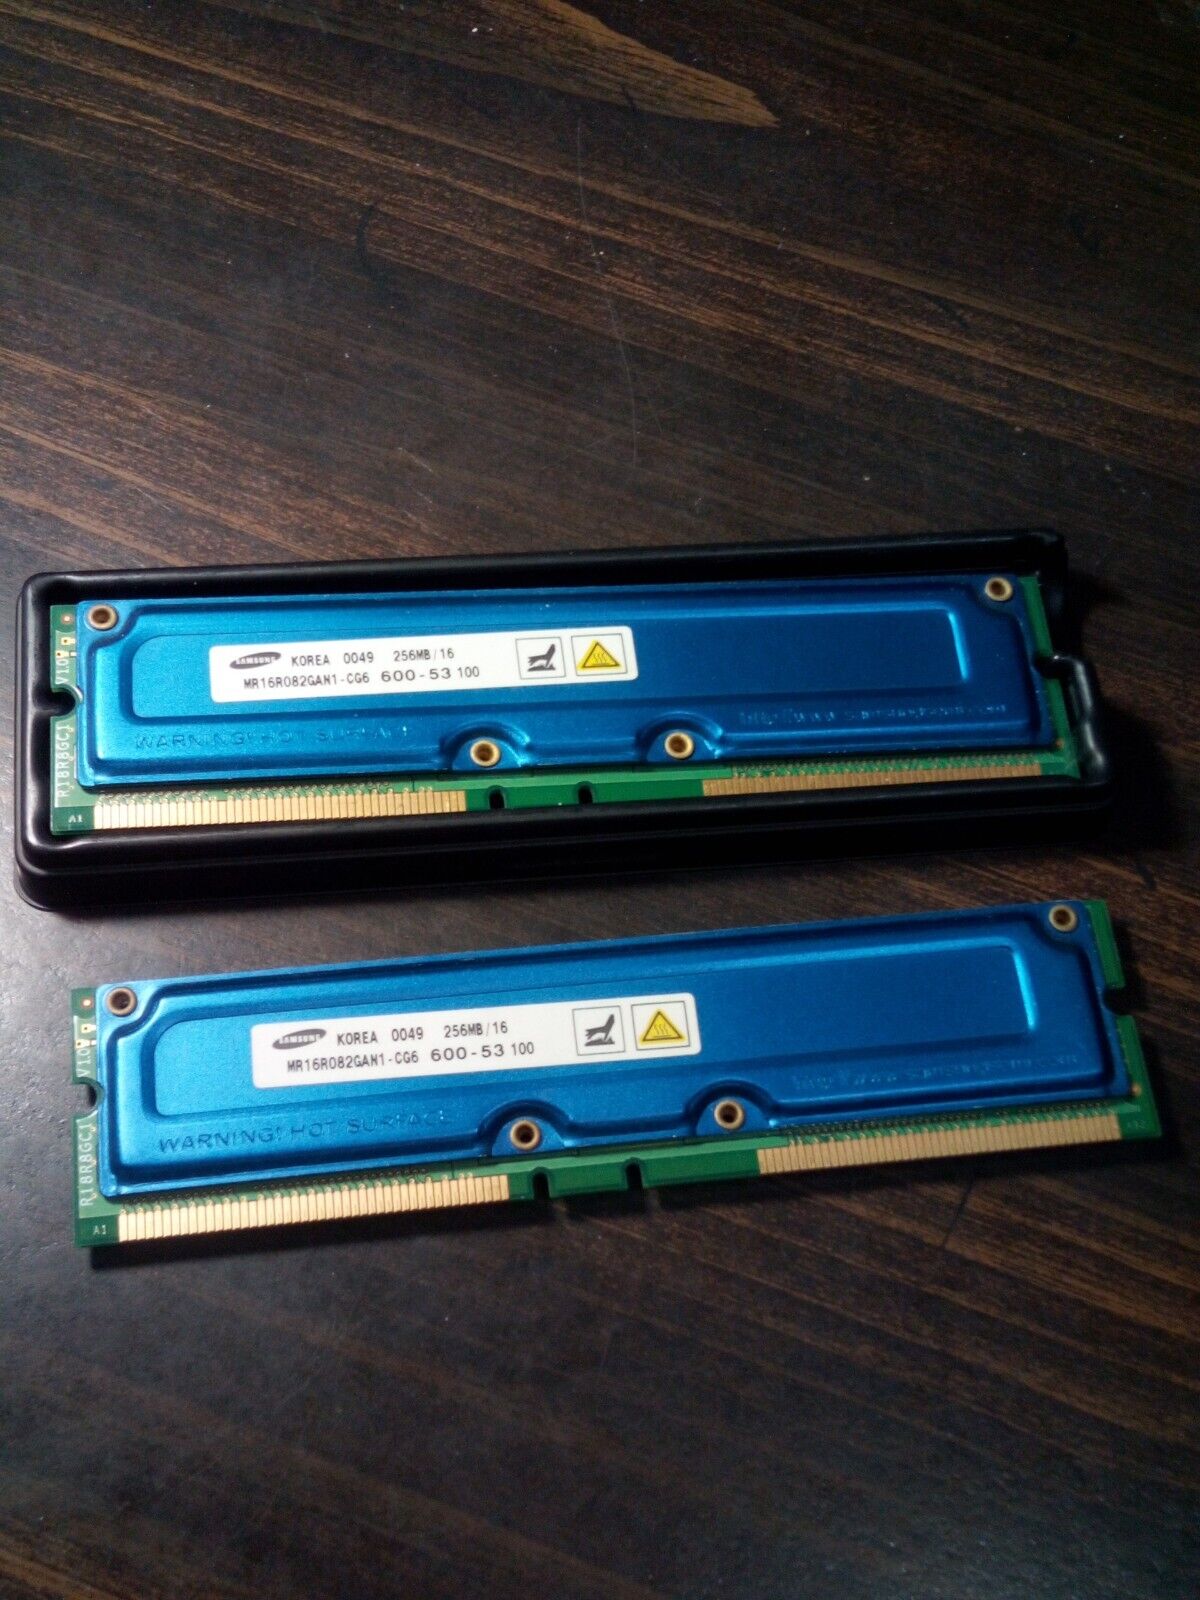 Samsung Set of 2 KOREA 0035 - 0037 / 256MB/16 MR18R082GAN1 Untested One In Case